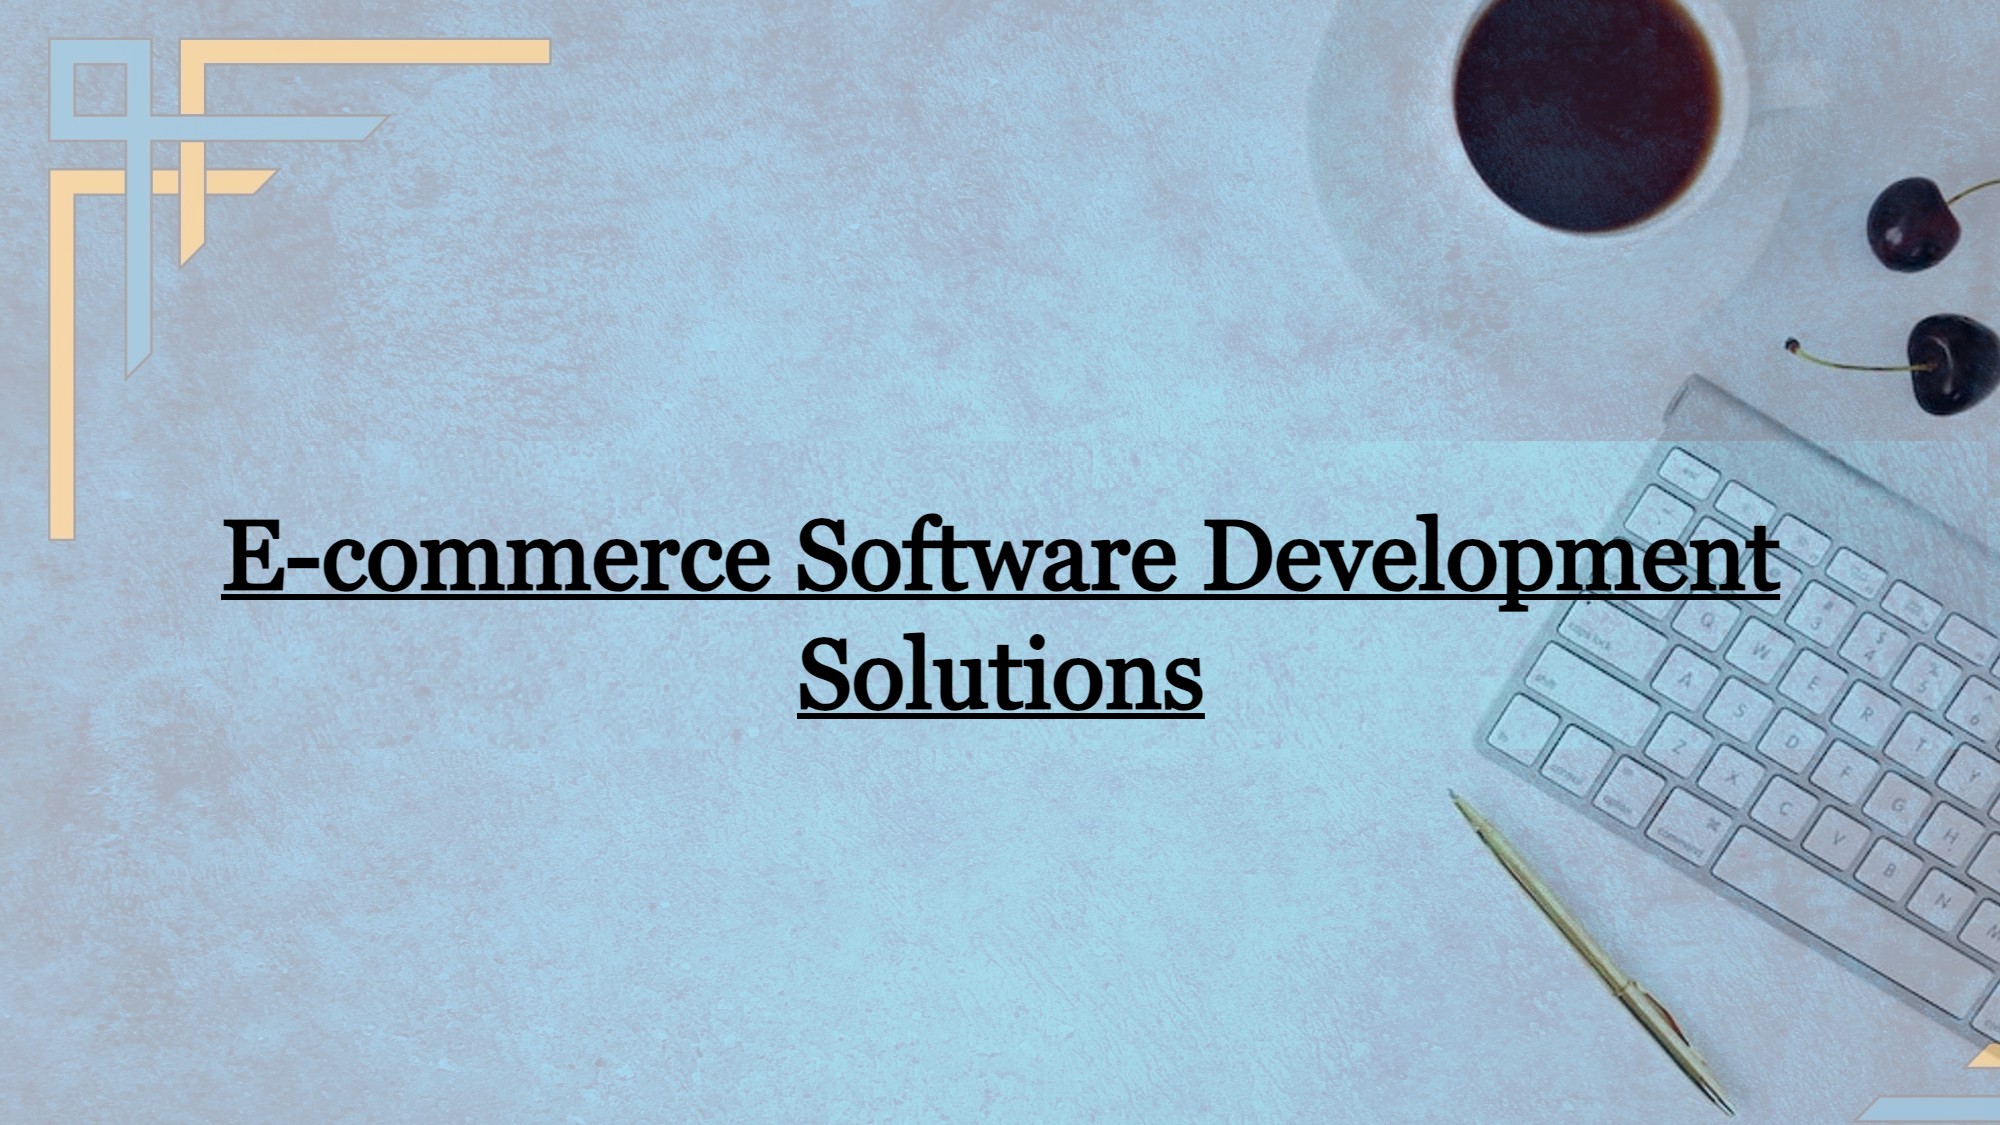 E-commerce Software Development Solutions